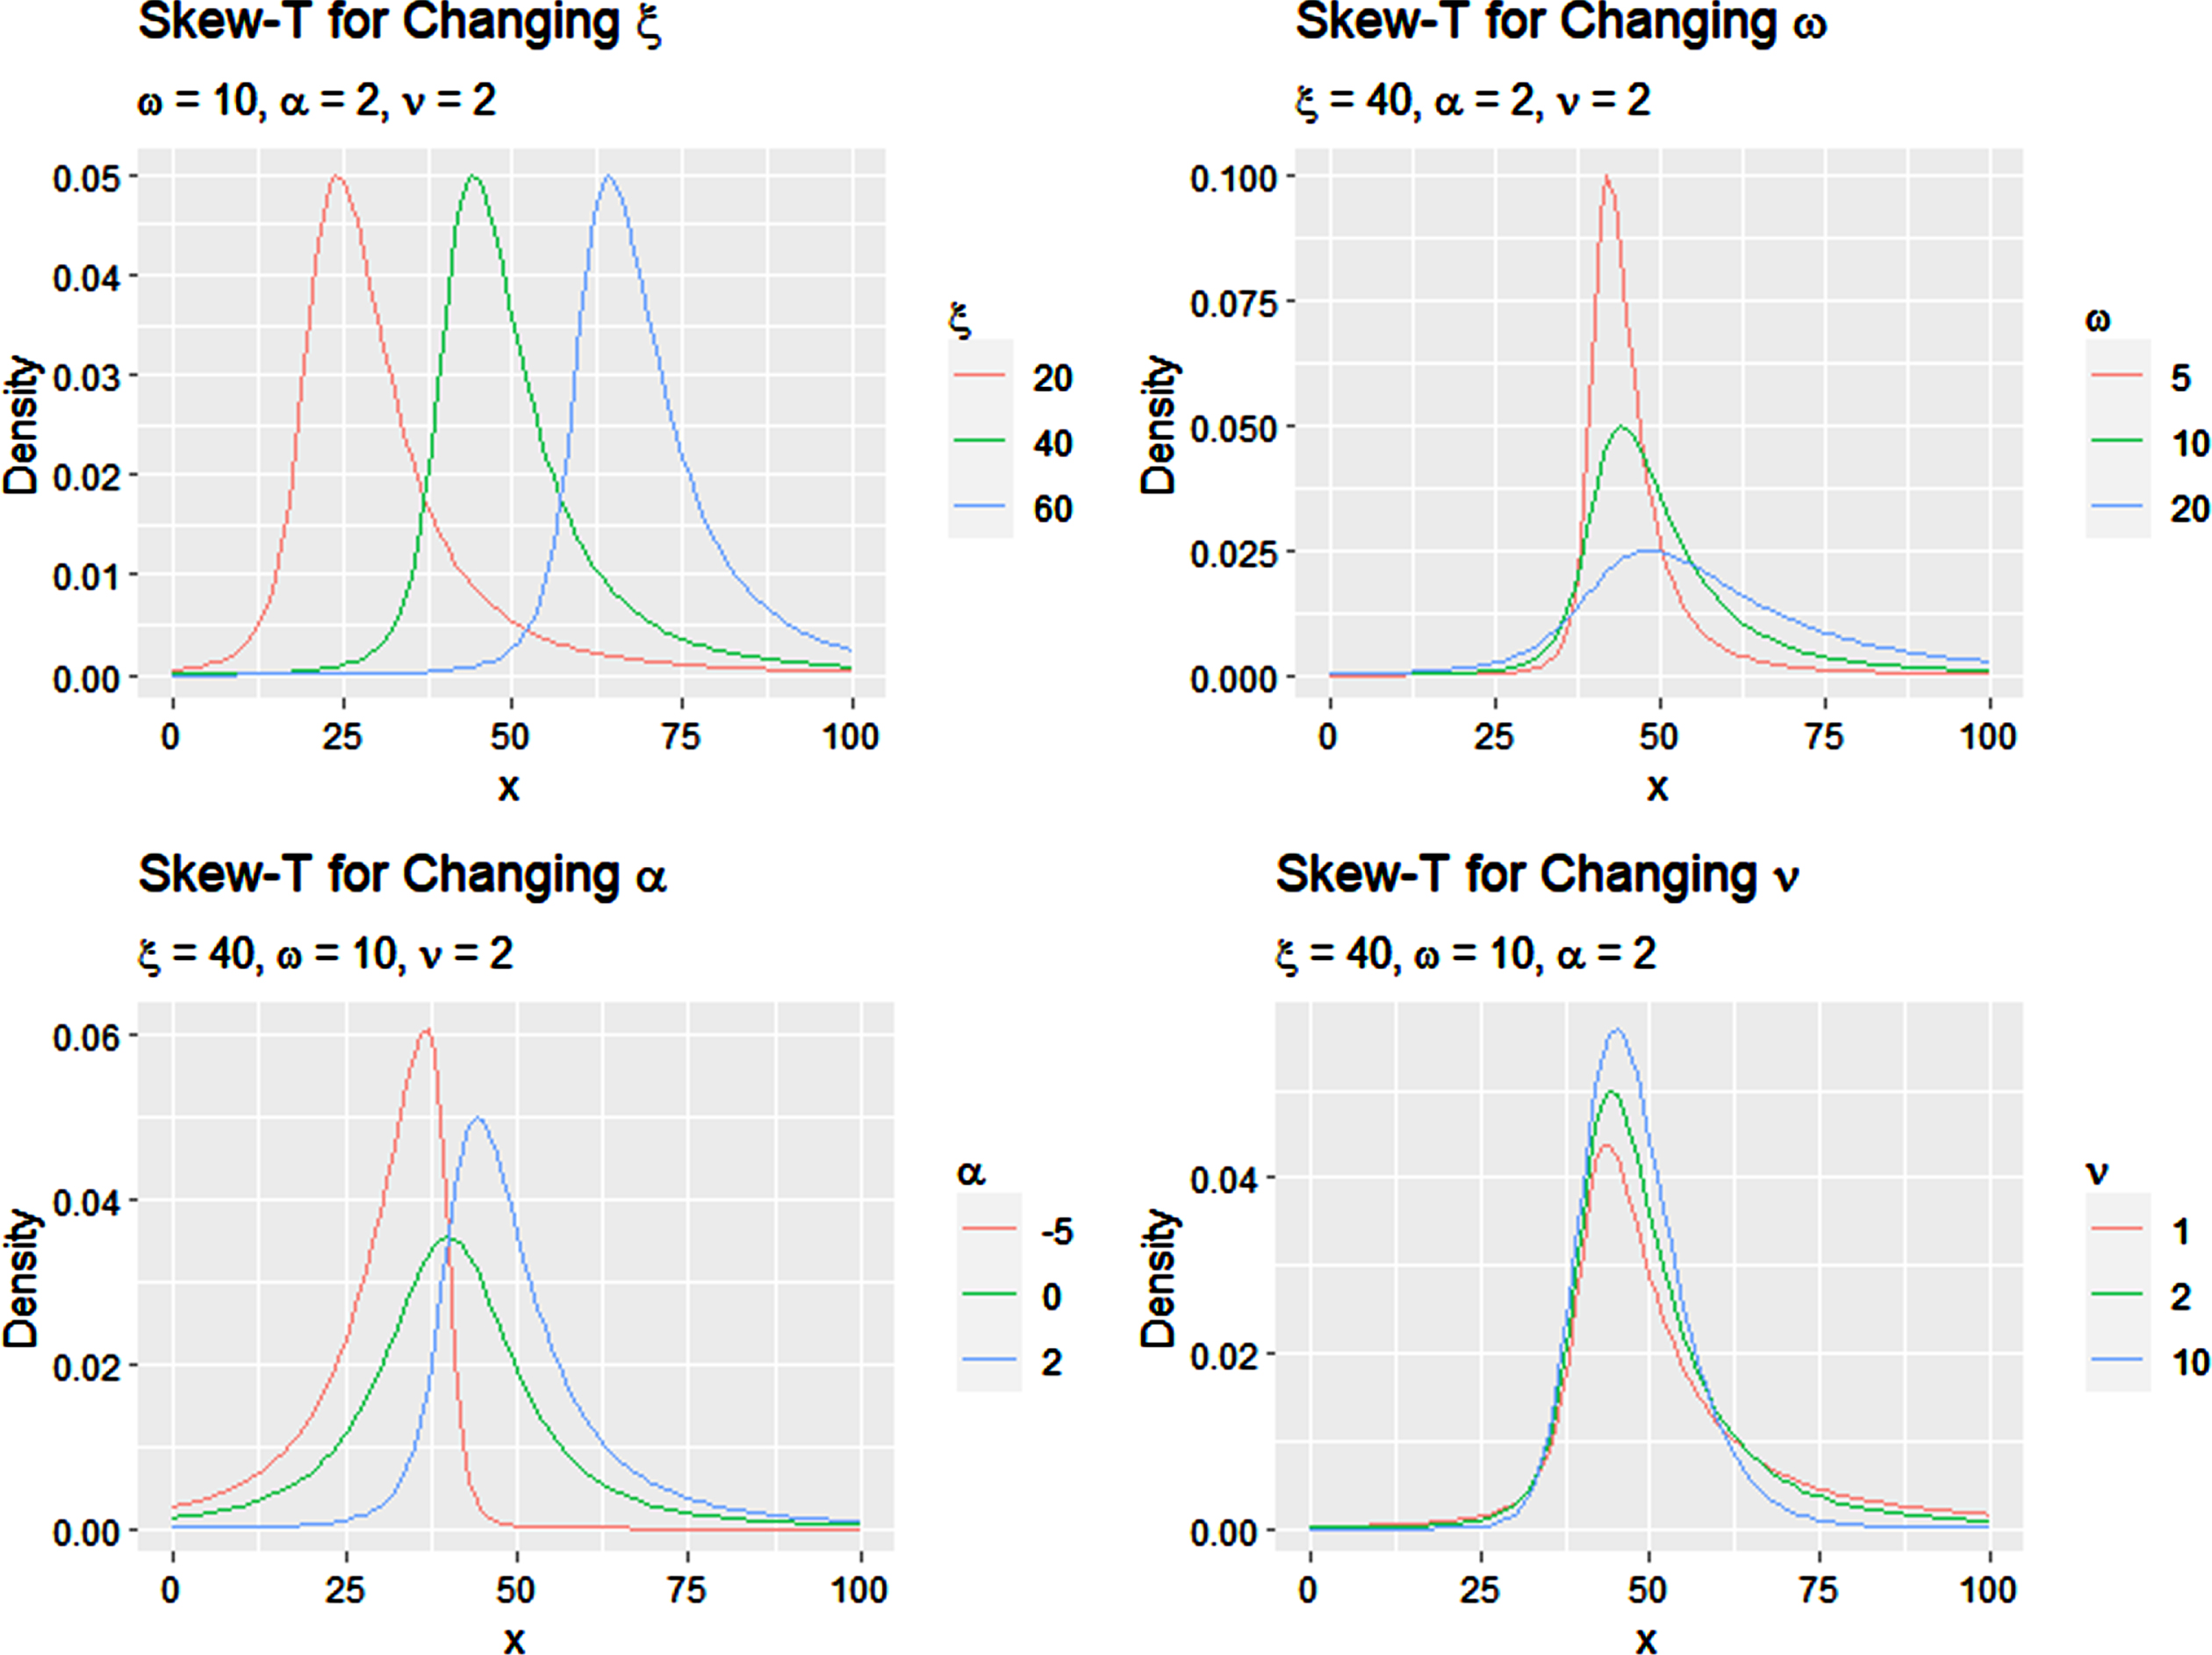 Plots of skew-t densities for changing parameter values.